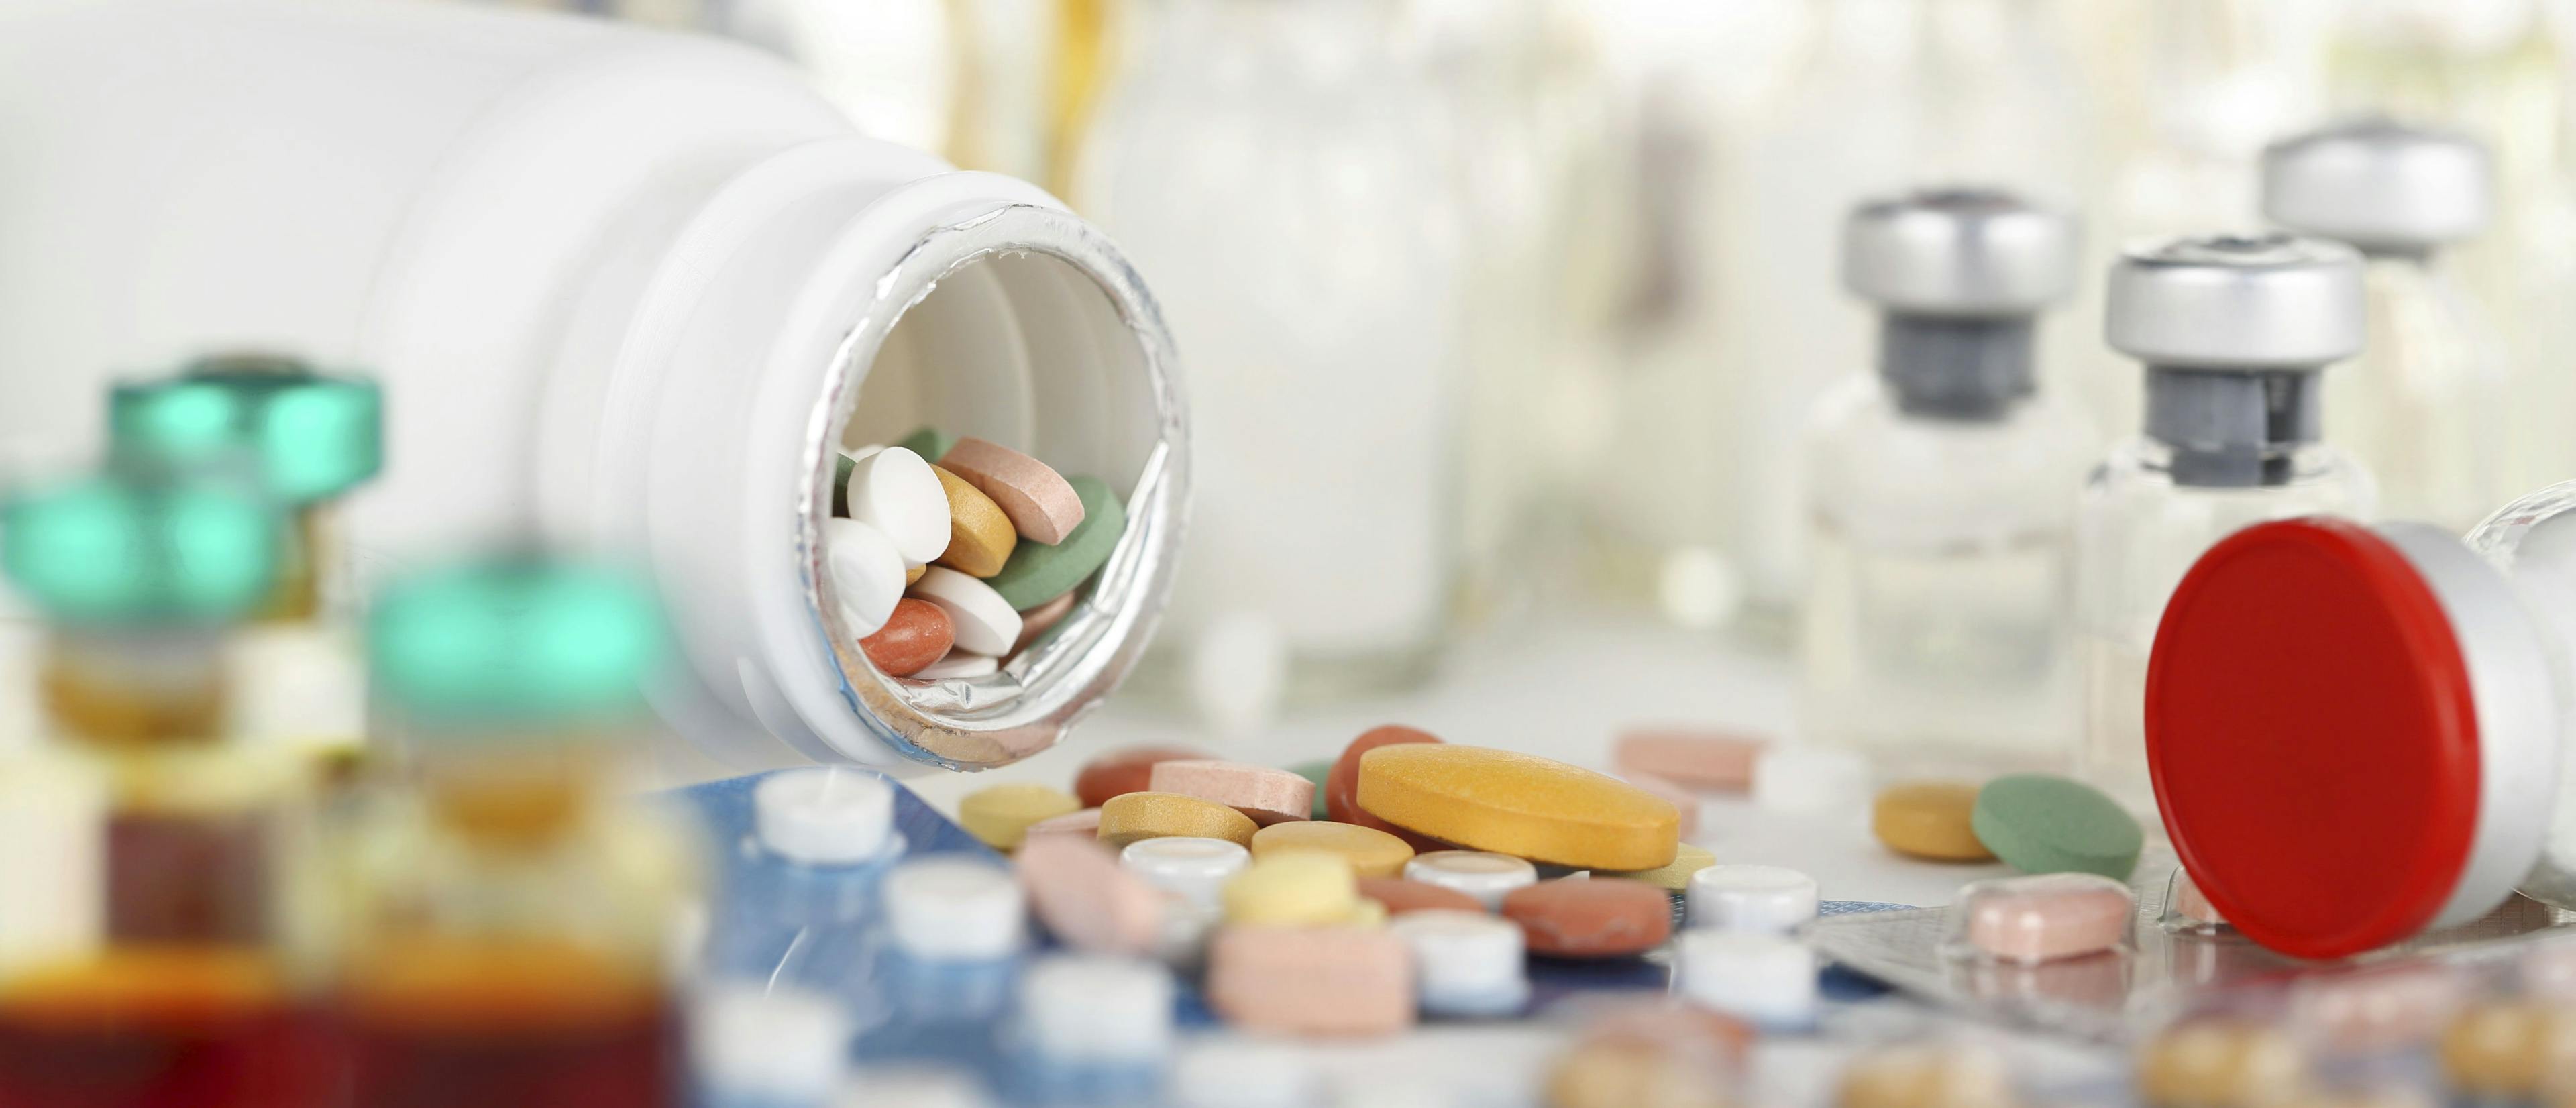 Common Unused Prescription Drugs Pose Serious Dangers